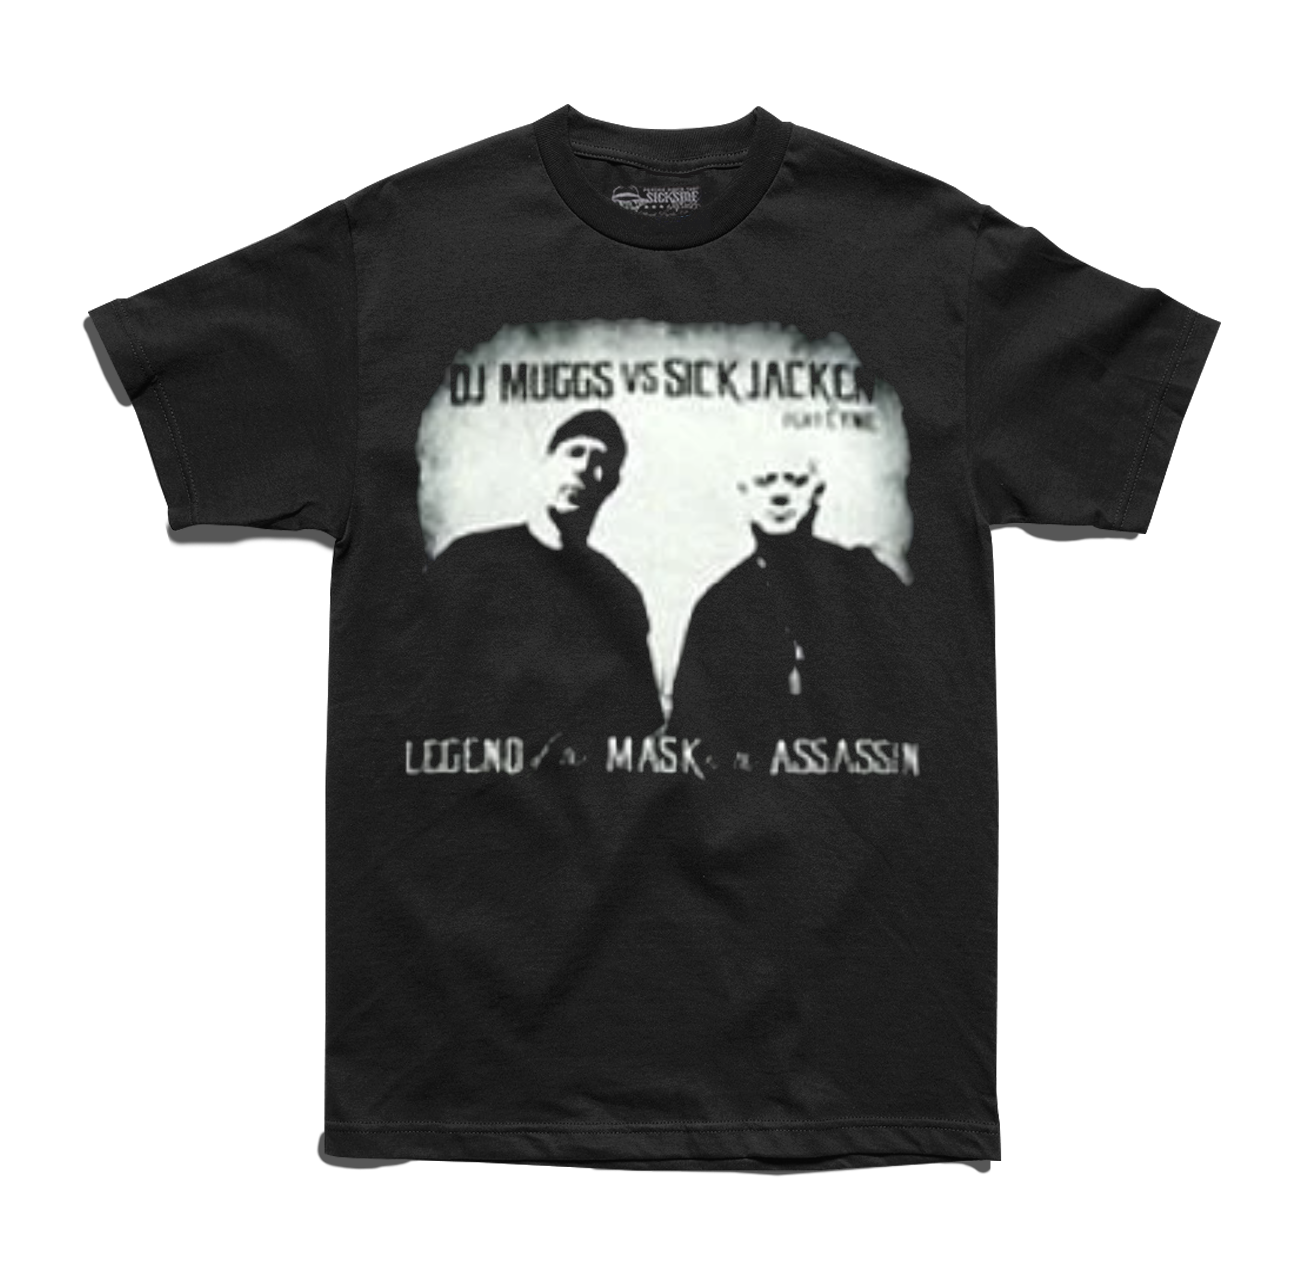 Psycho Realm Dj Muggs Sick Jack Shirt 1 – The Psycho Shop / Psycho Realm Merchandise